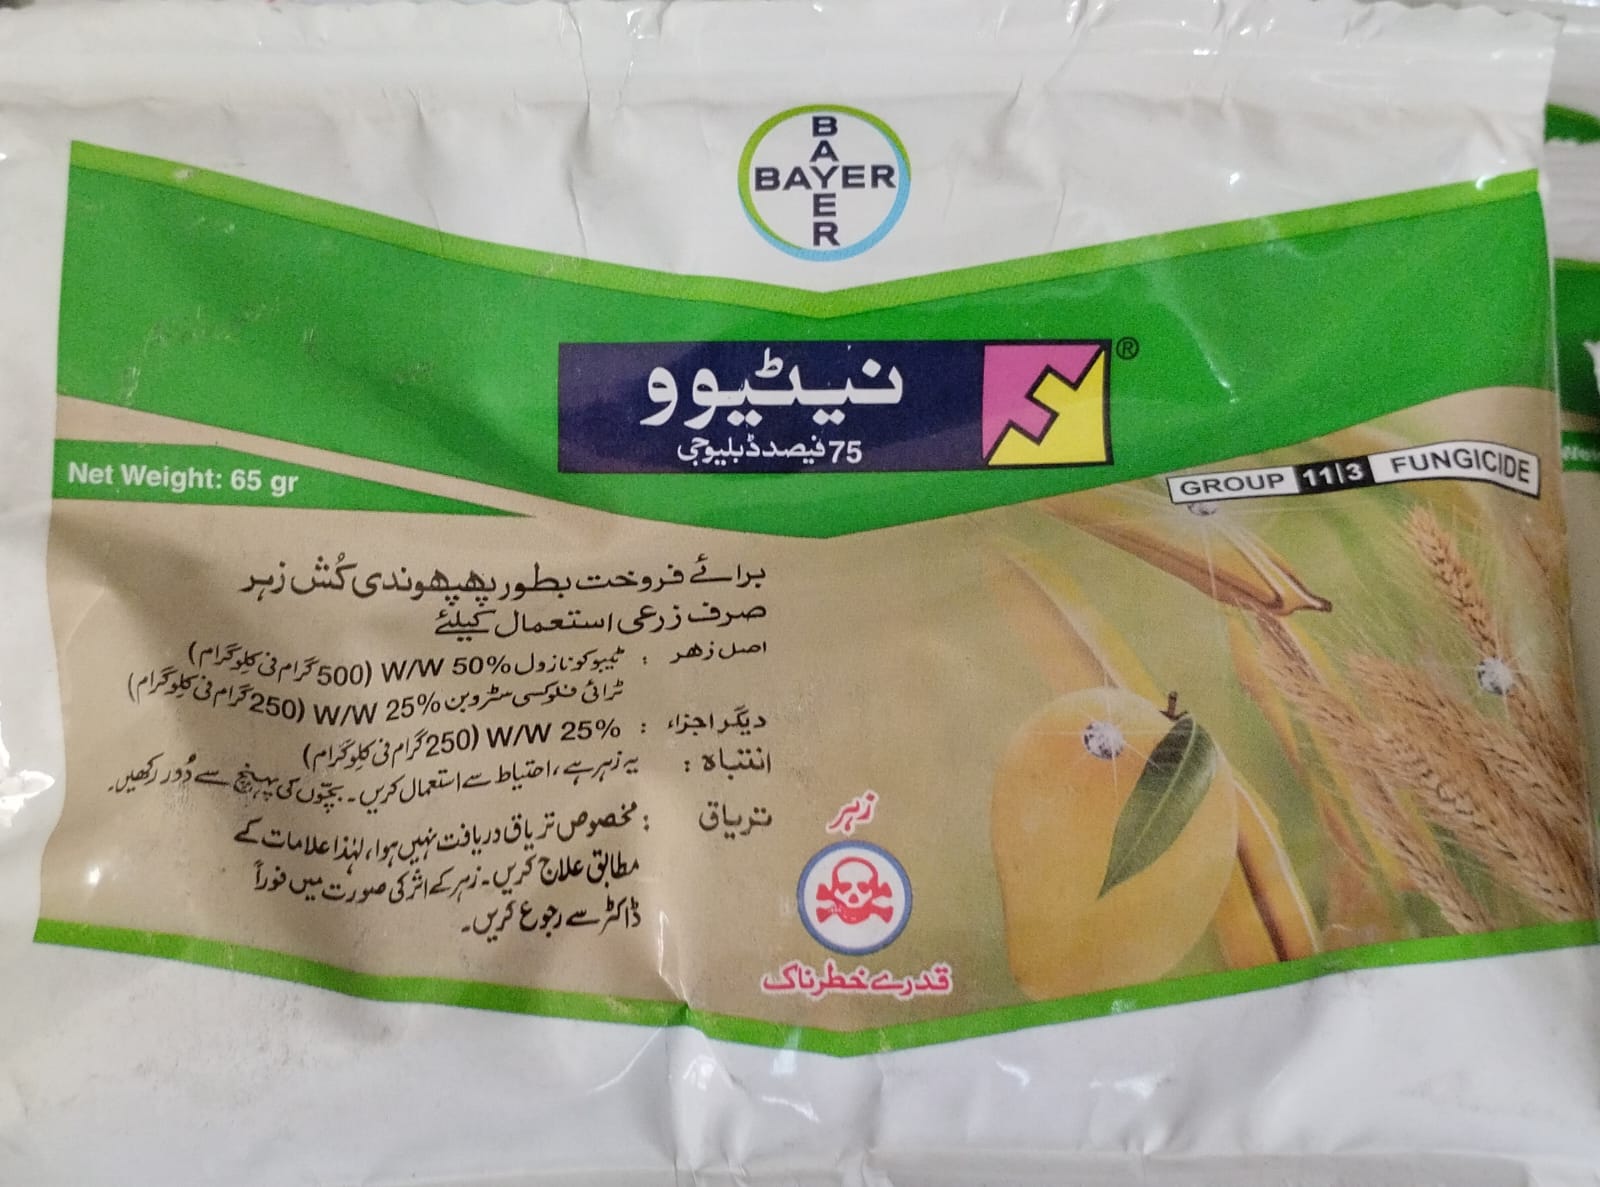 2nd Nativo 65gm Tebuconazole Trifloxystrobin Fungicide Bayer Pakistan